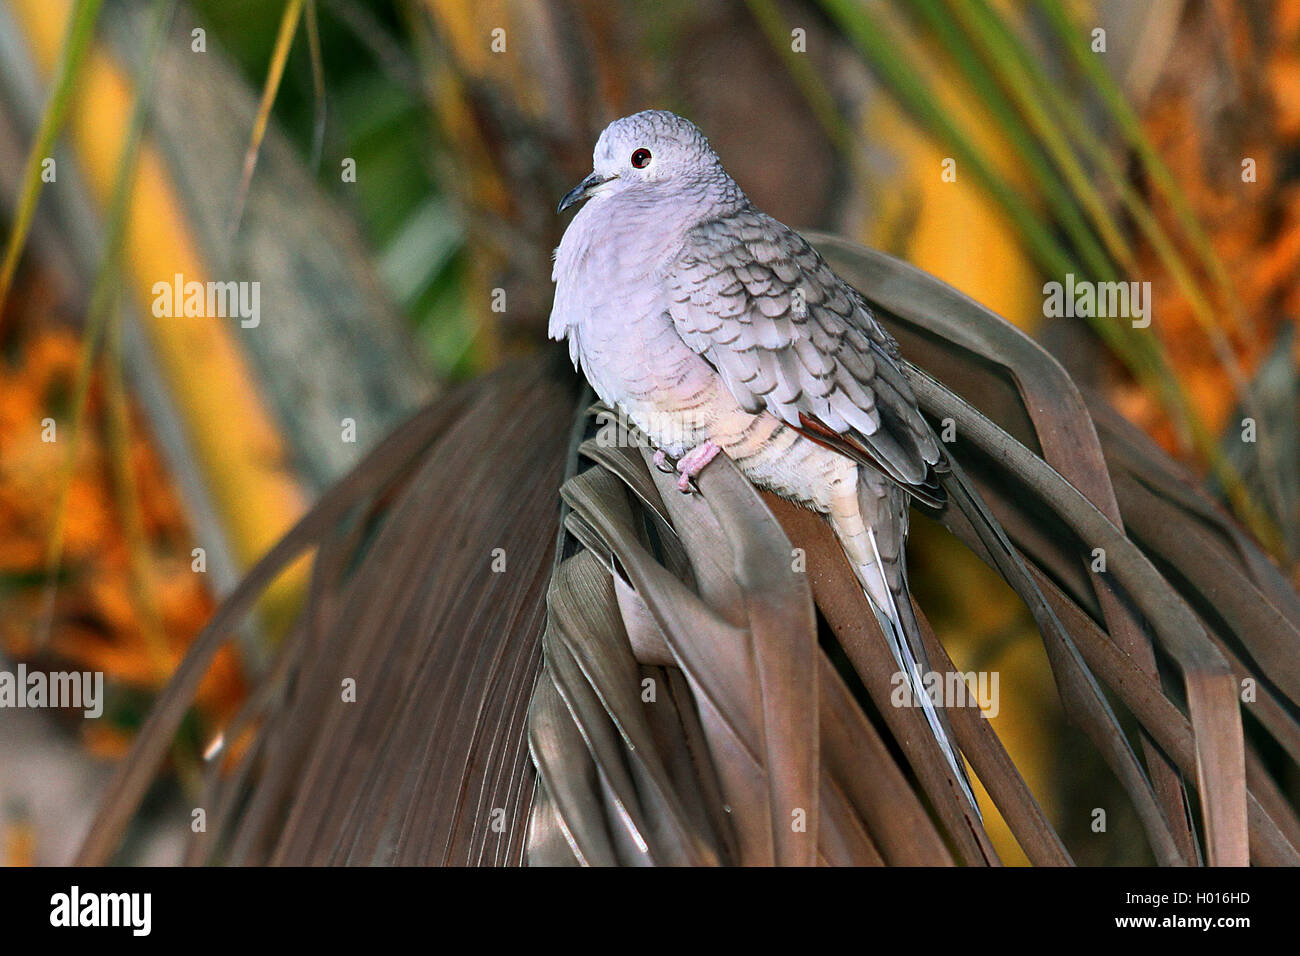 Inca dove (Scardafella Inca, Columbina Inca), sitzt auf einer Palme Wedel, Costa Rica Stockfoto